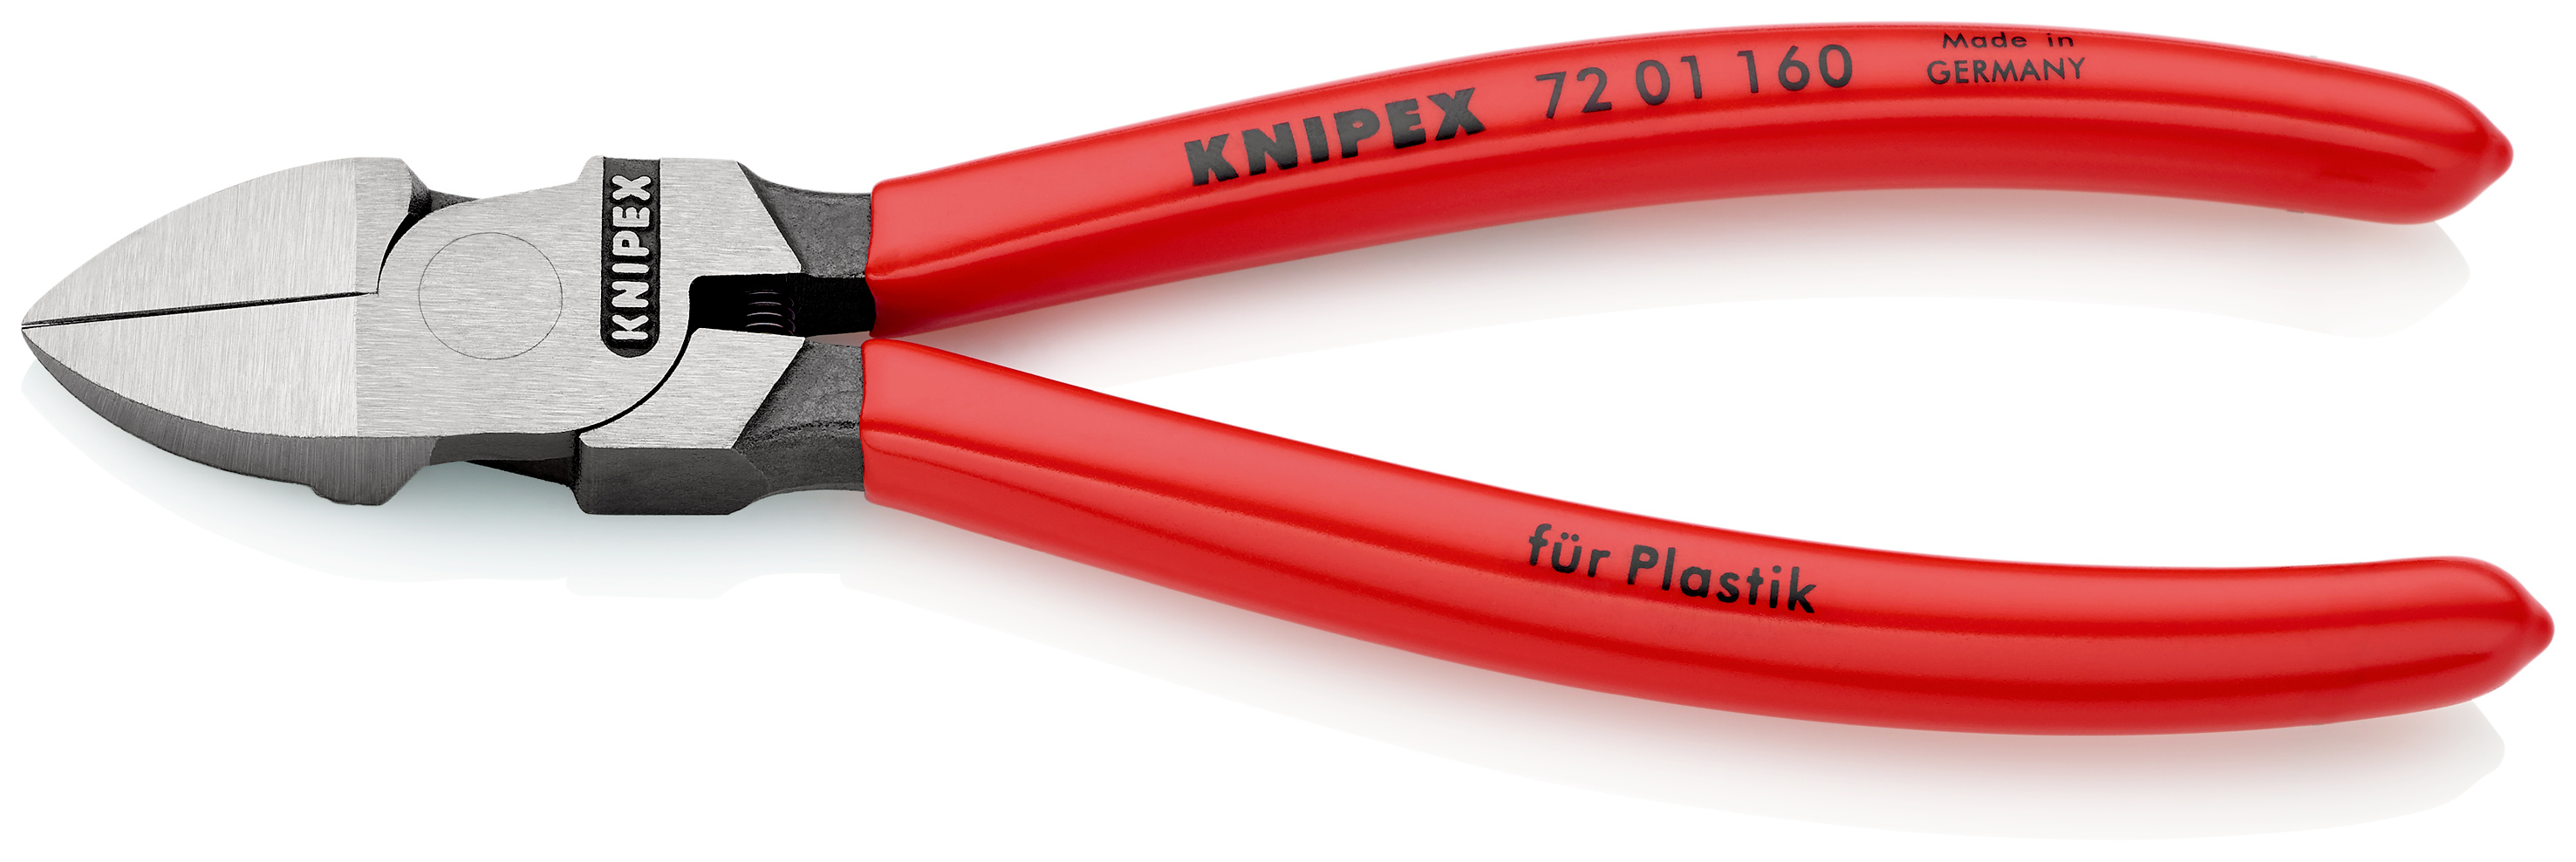 Diagonal Cutter for plastics | Knipex